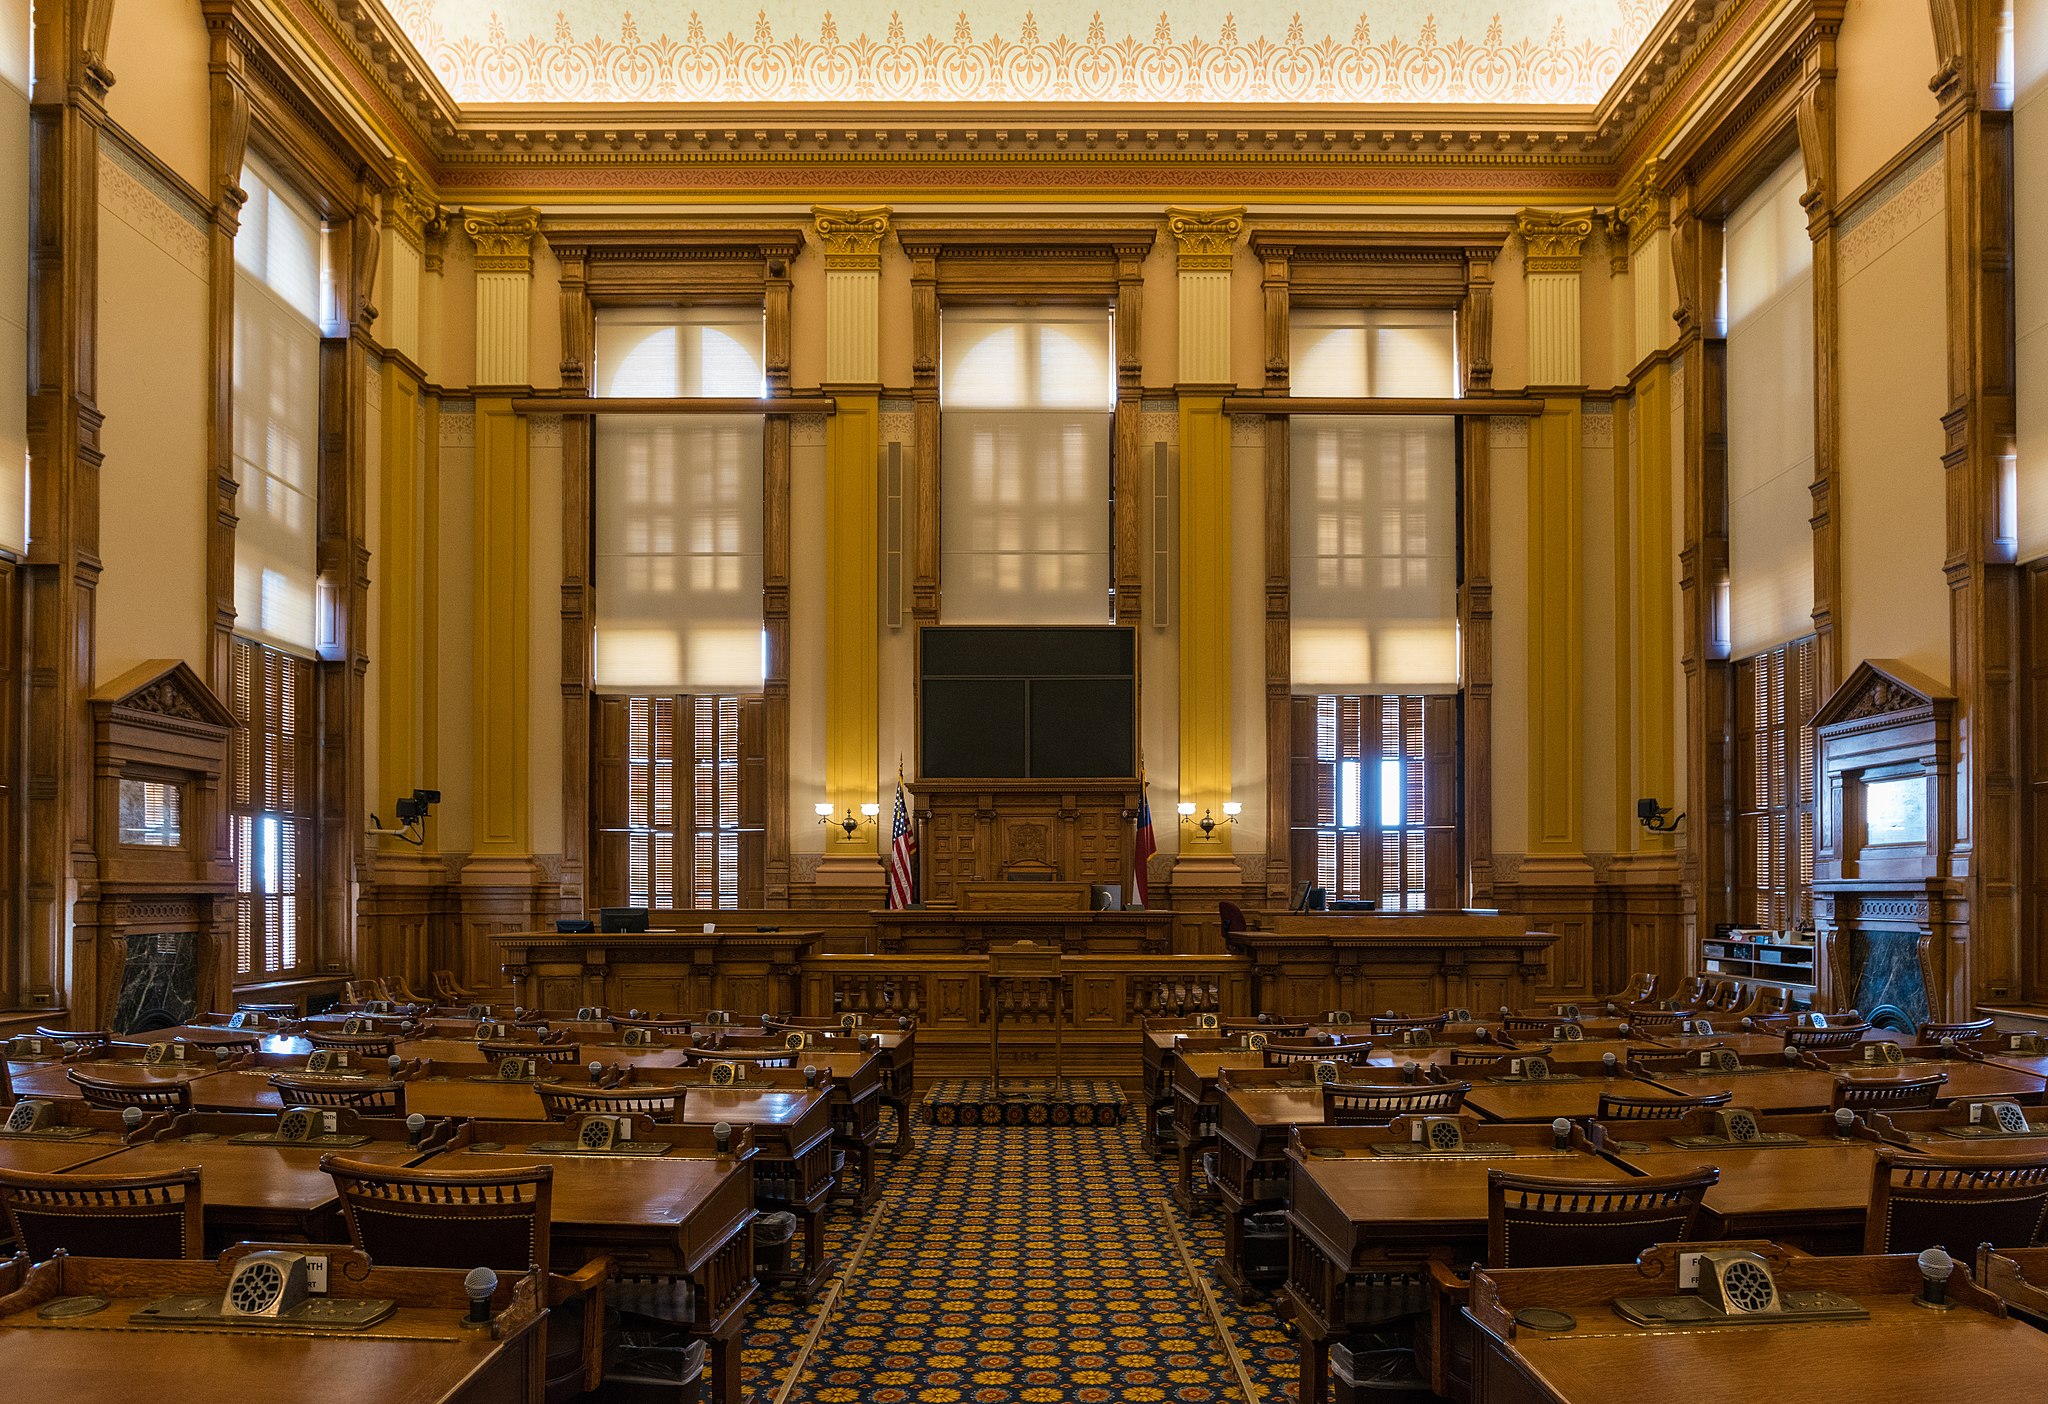 State of Georgia Senate. Ornate inside of the chambers